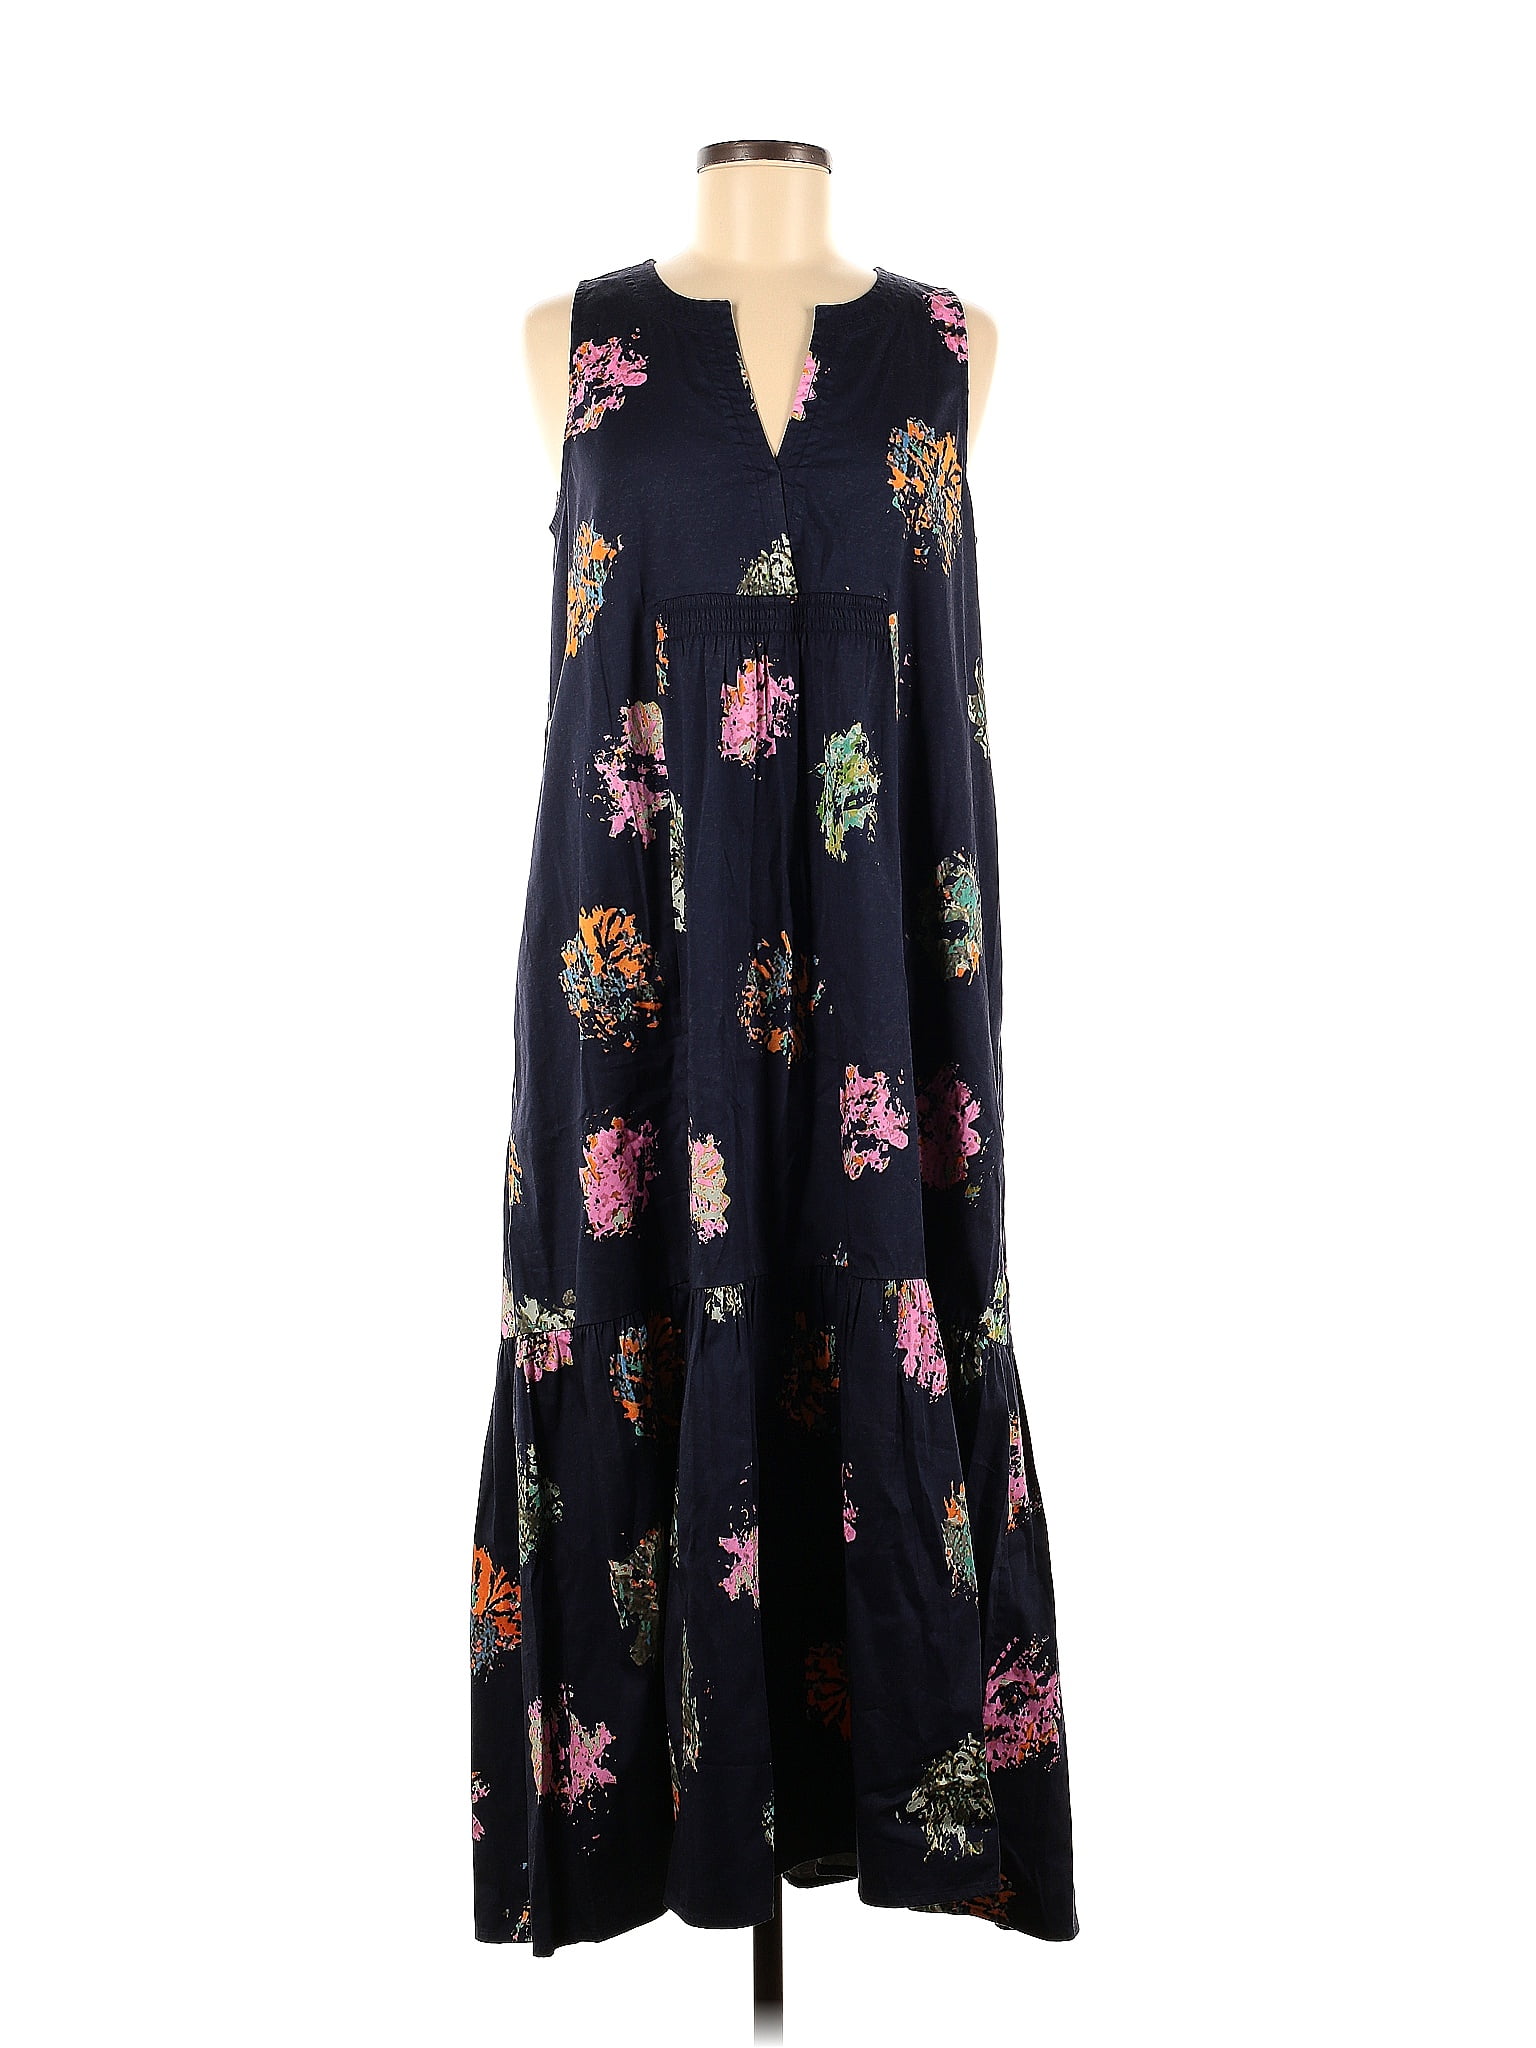 Nic + Zoe Floral Navy Black Casual Dress Size M - 78% off | thredUP